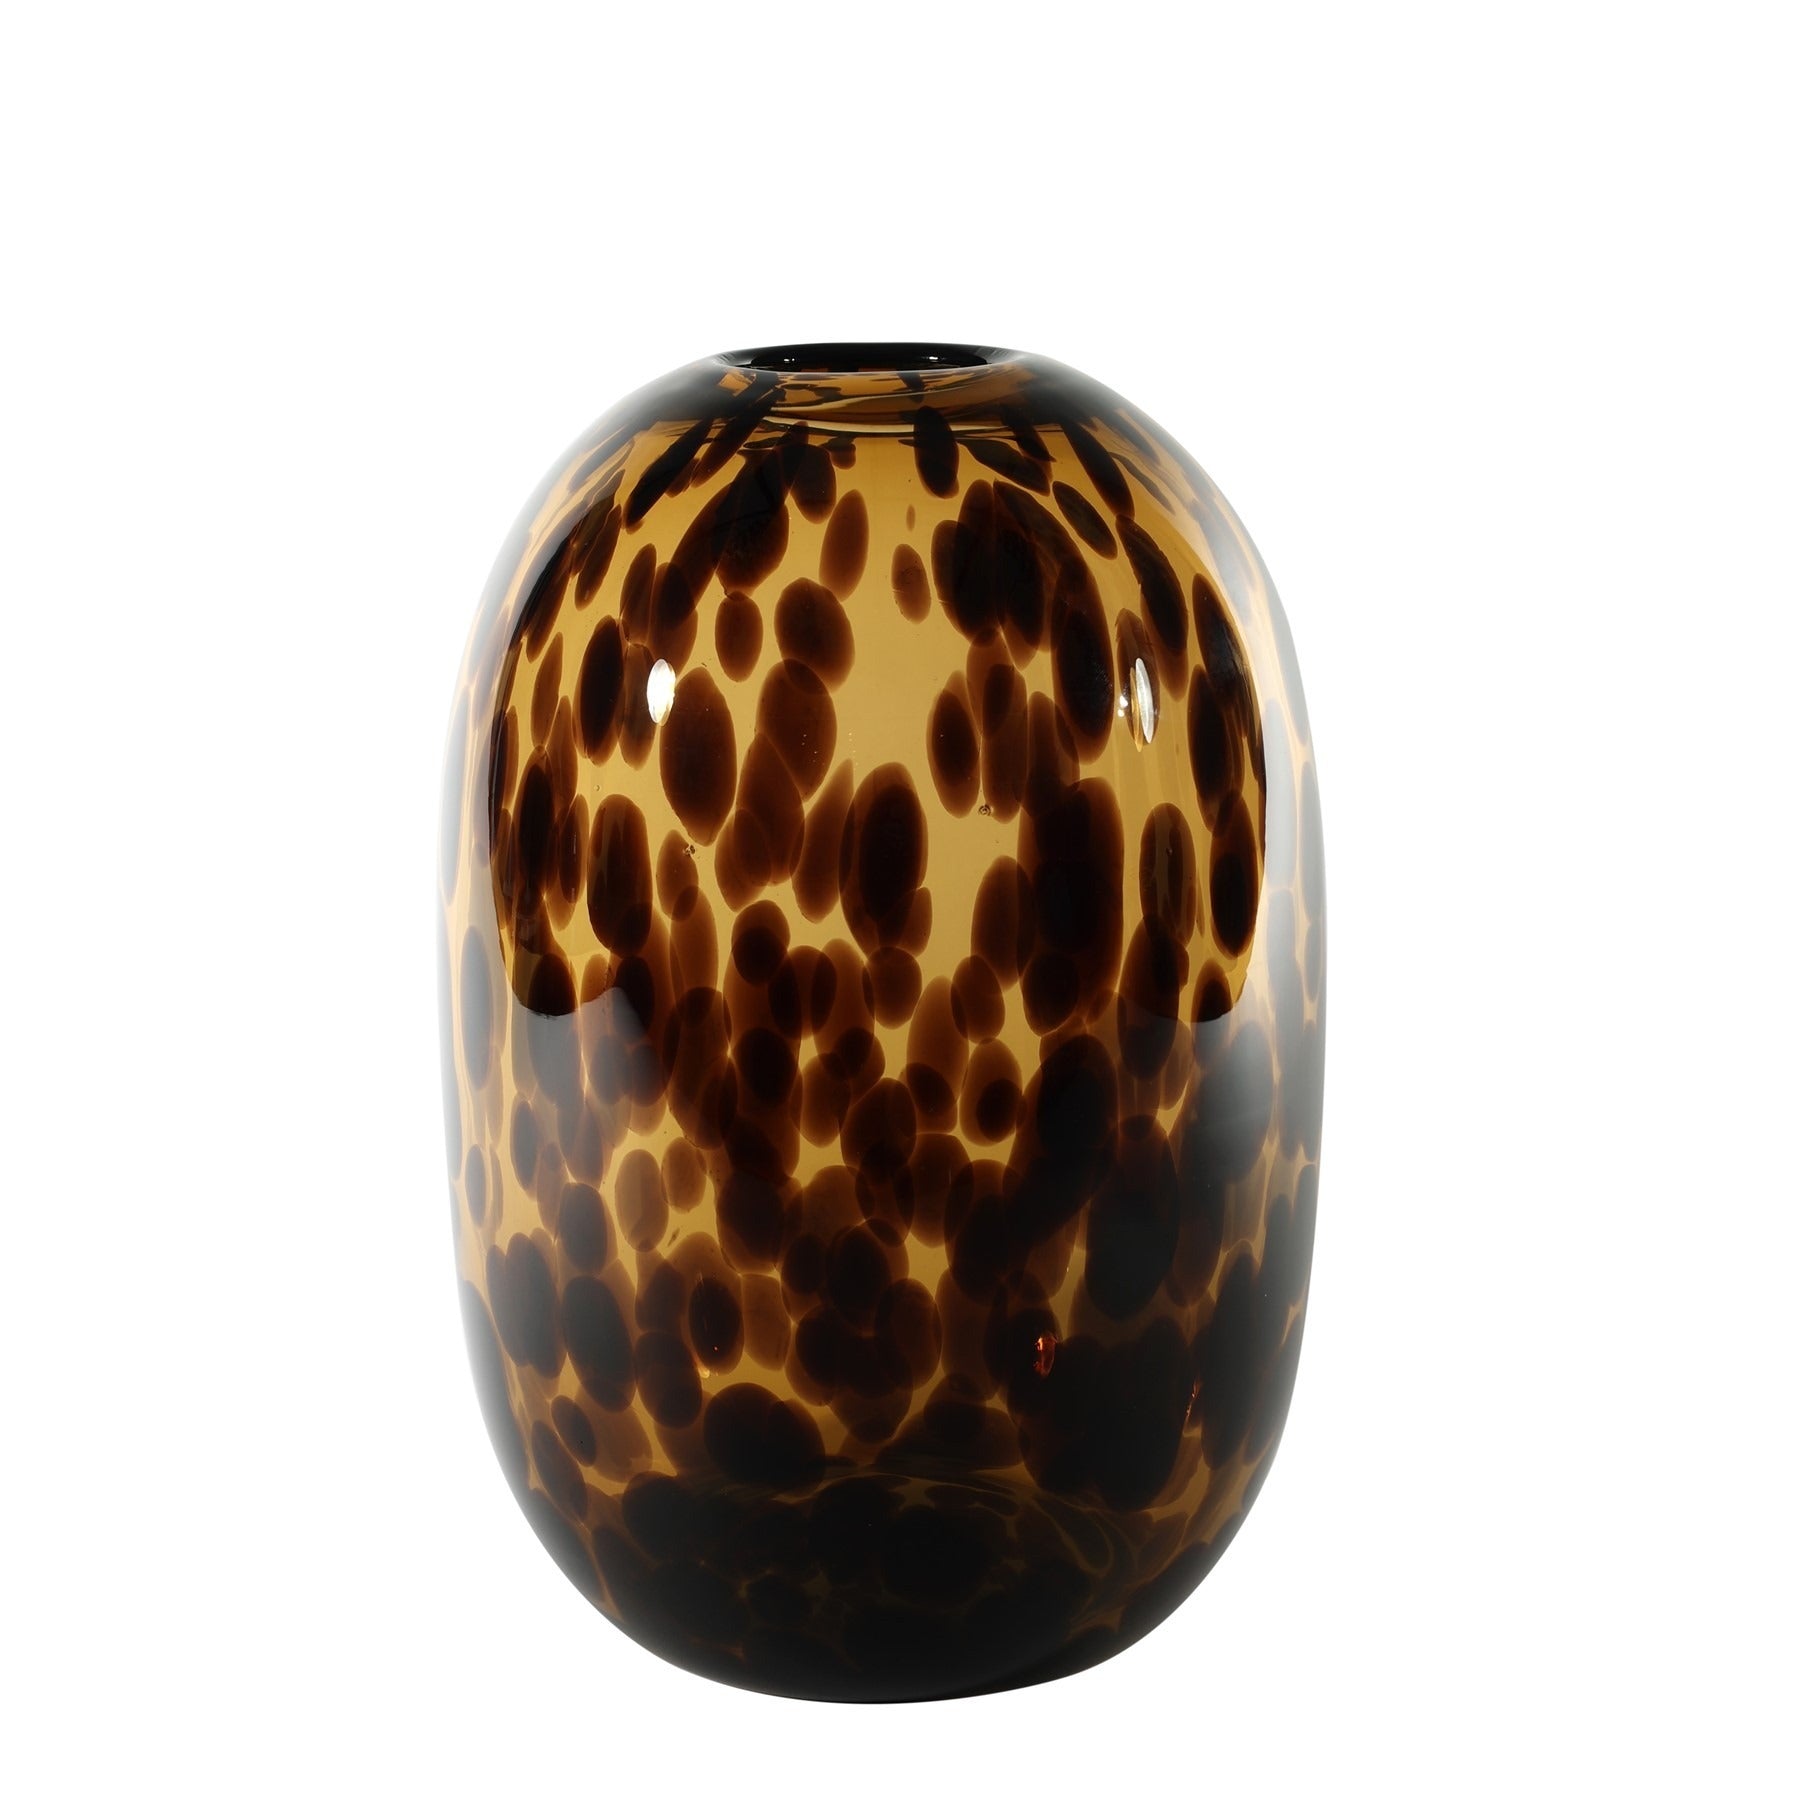 View Arabella Mottled Brown Tall Vase H265x18 information